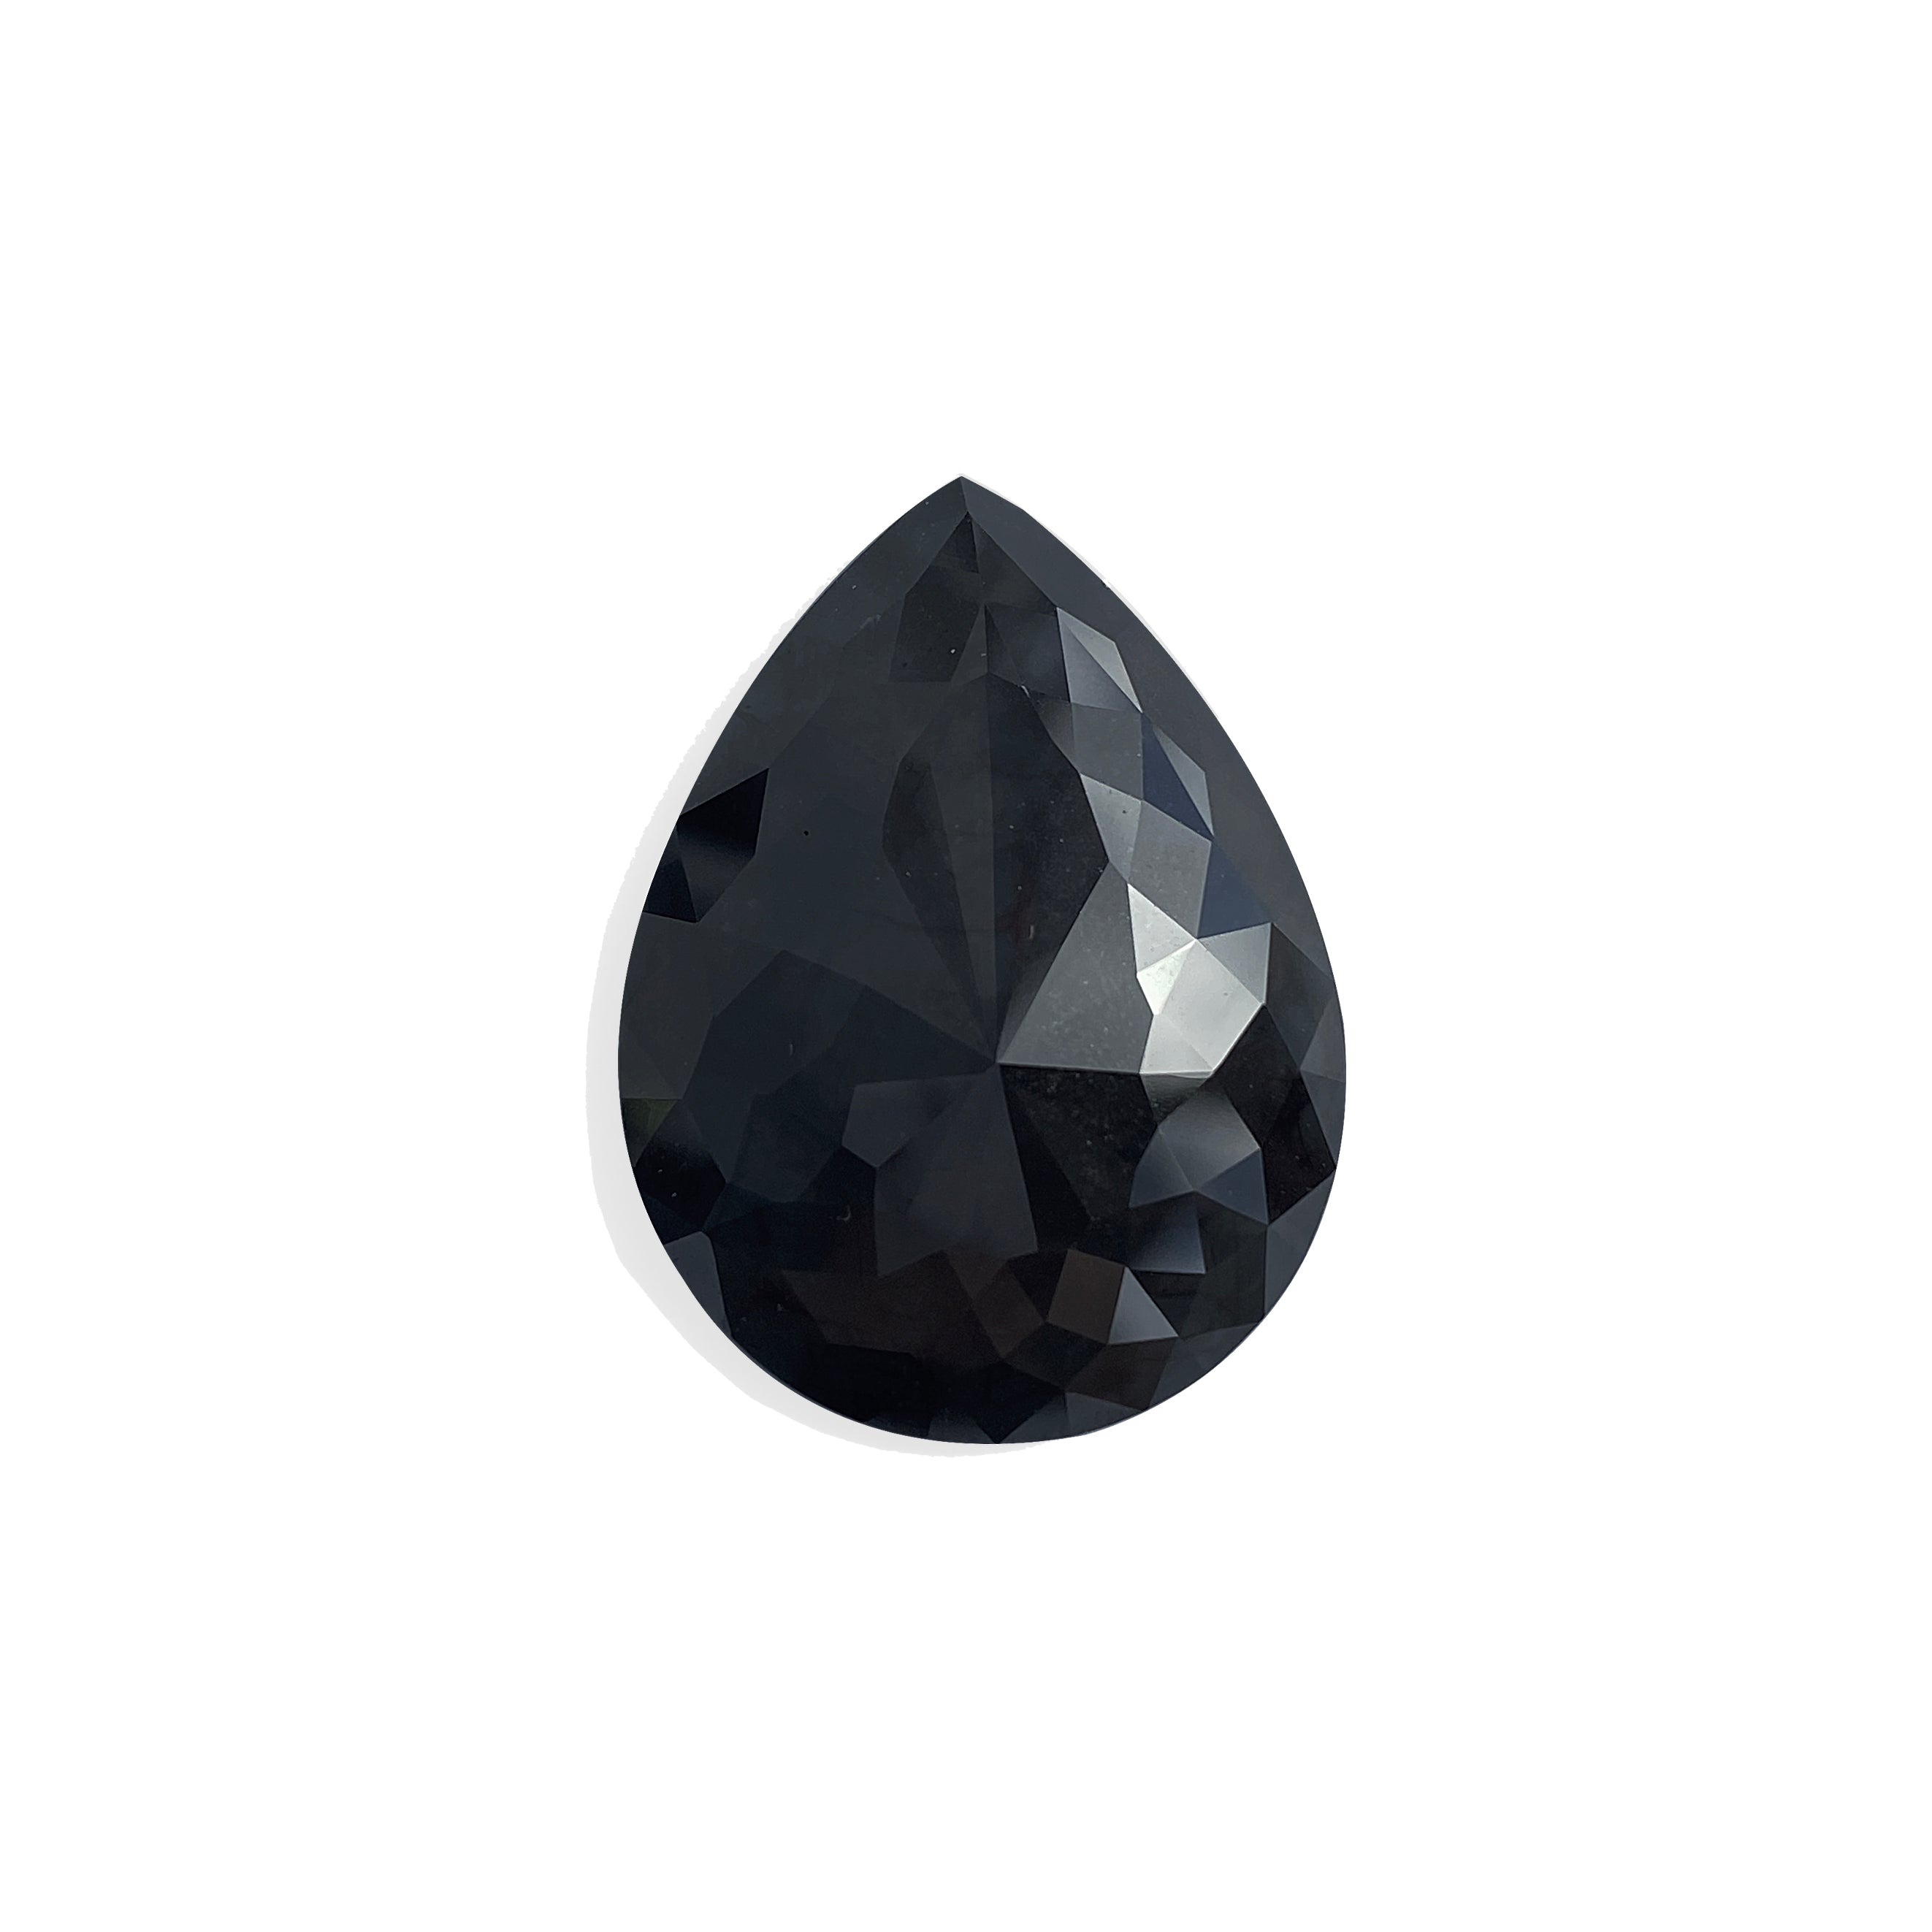 42.41 Carat Pear Shaped Black Diamond